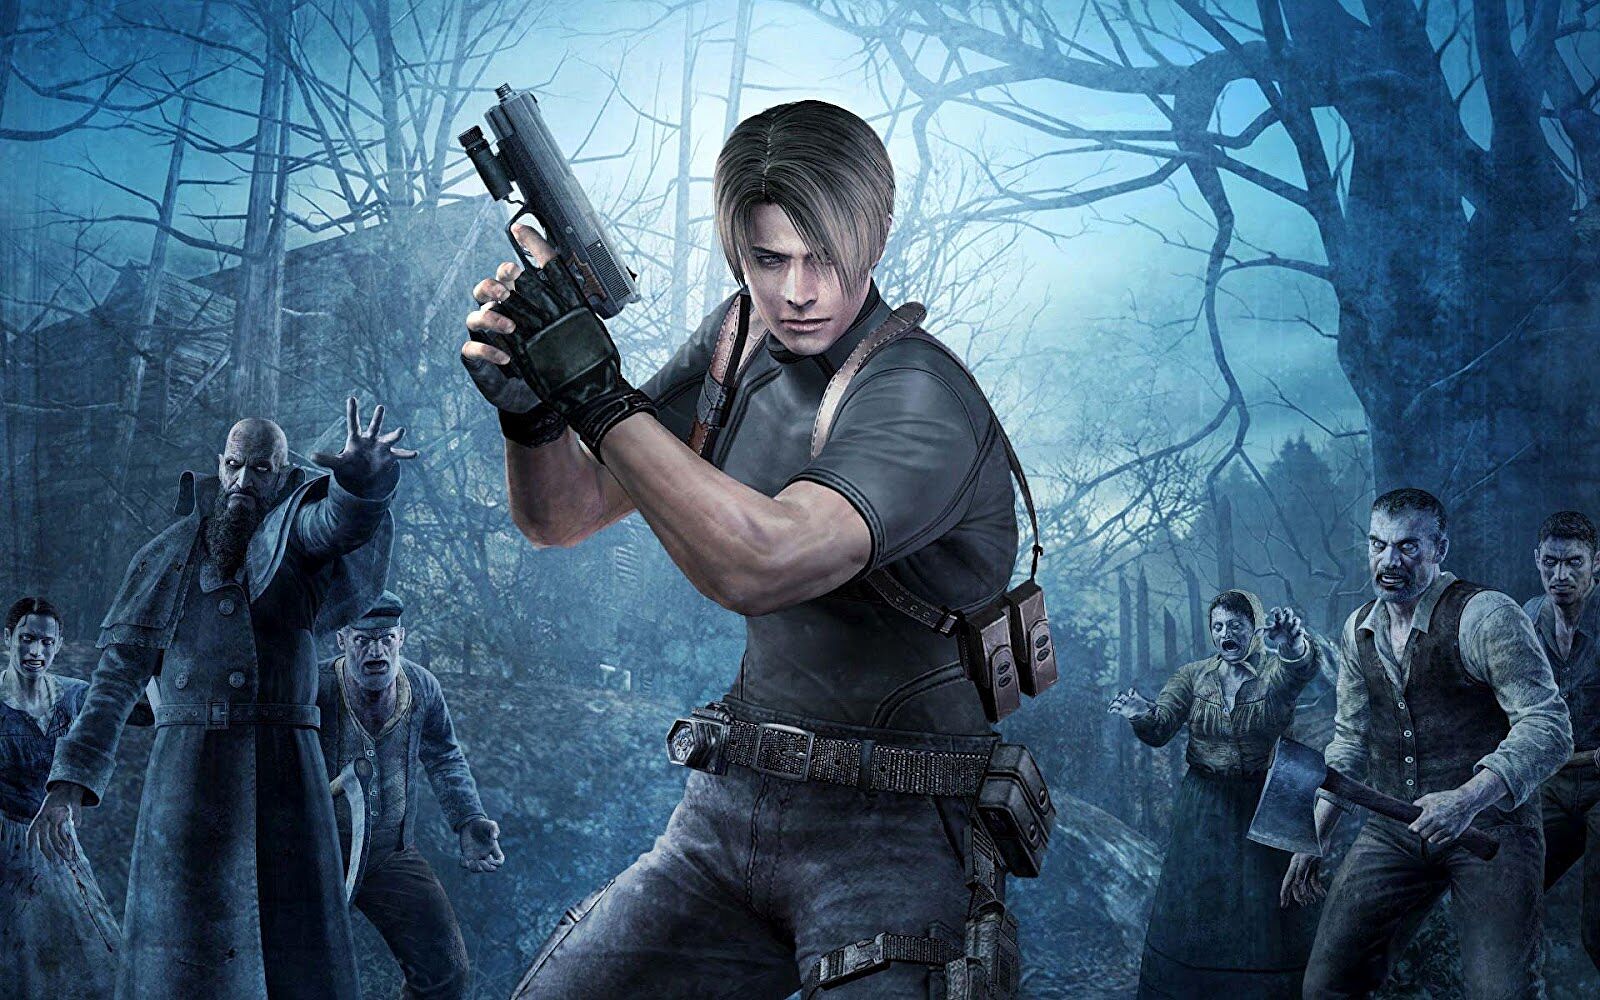 Wallpaper de Resident Evil 4 supercriativo viraliza no Twitter